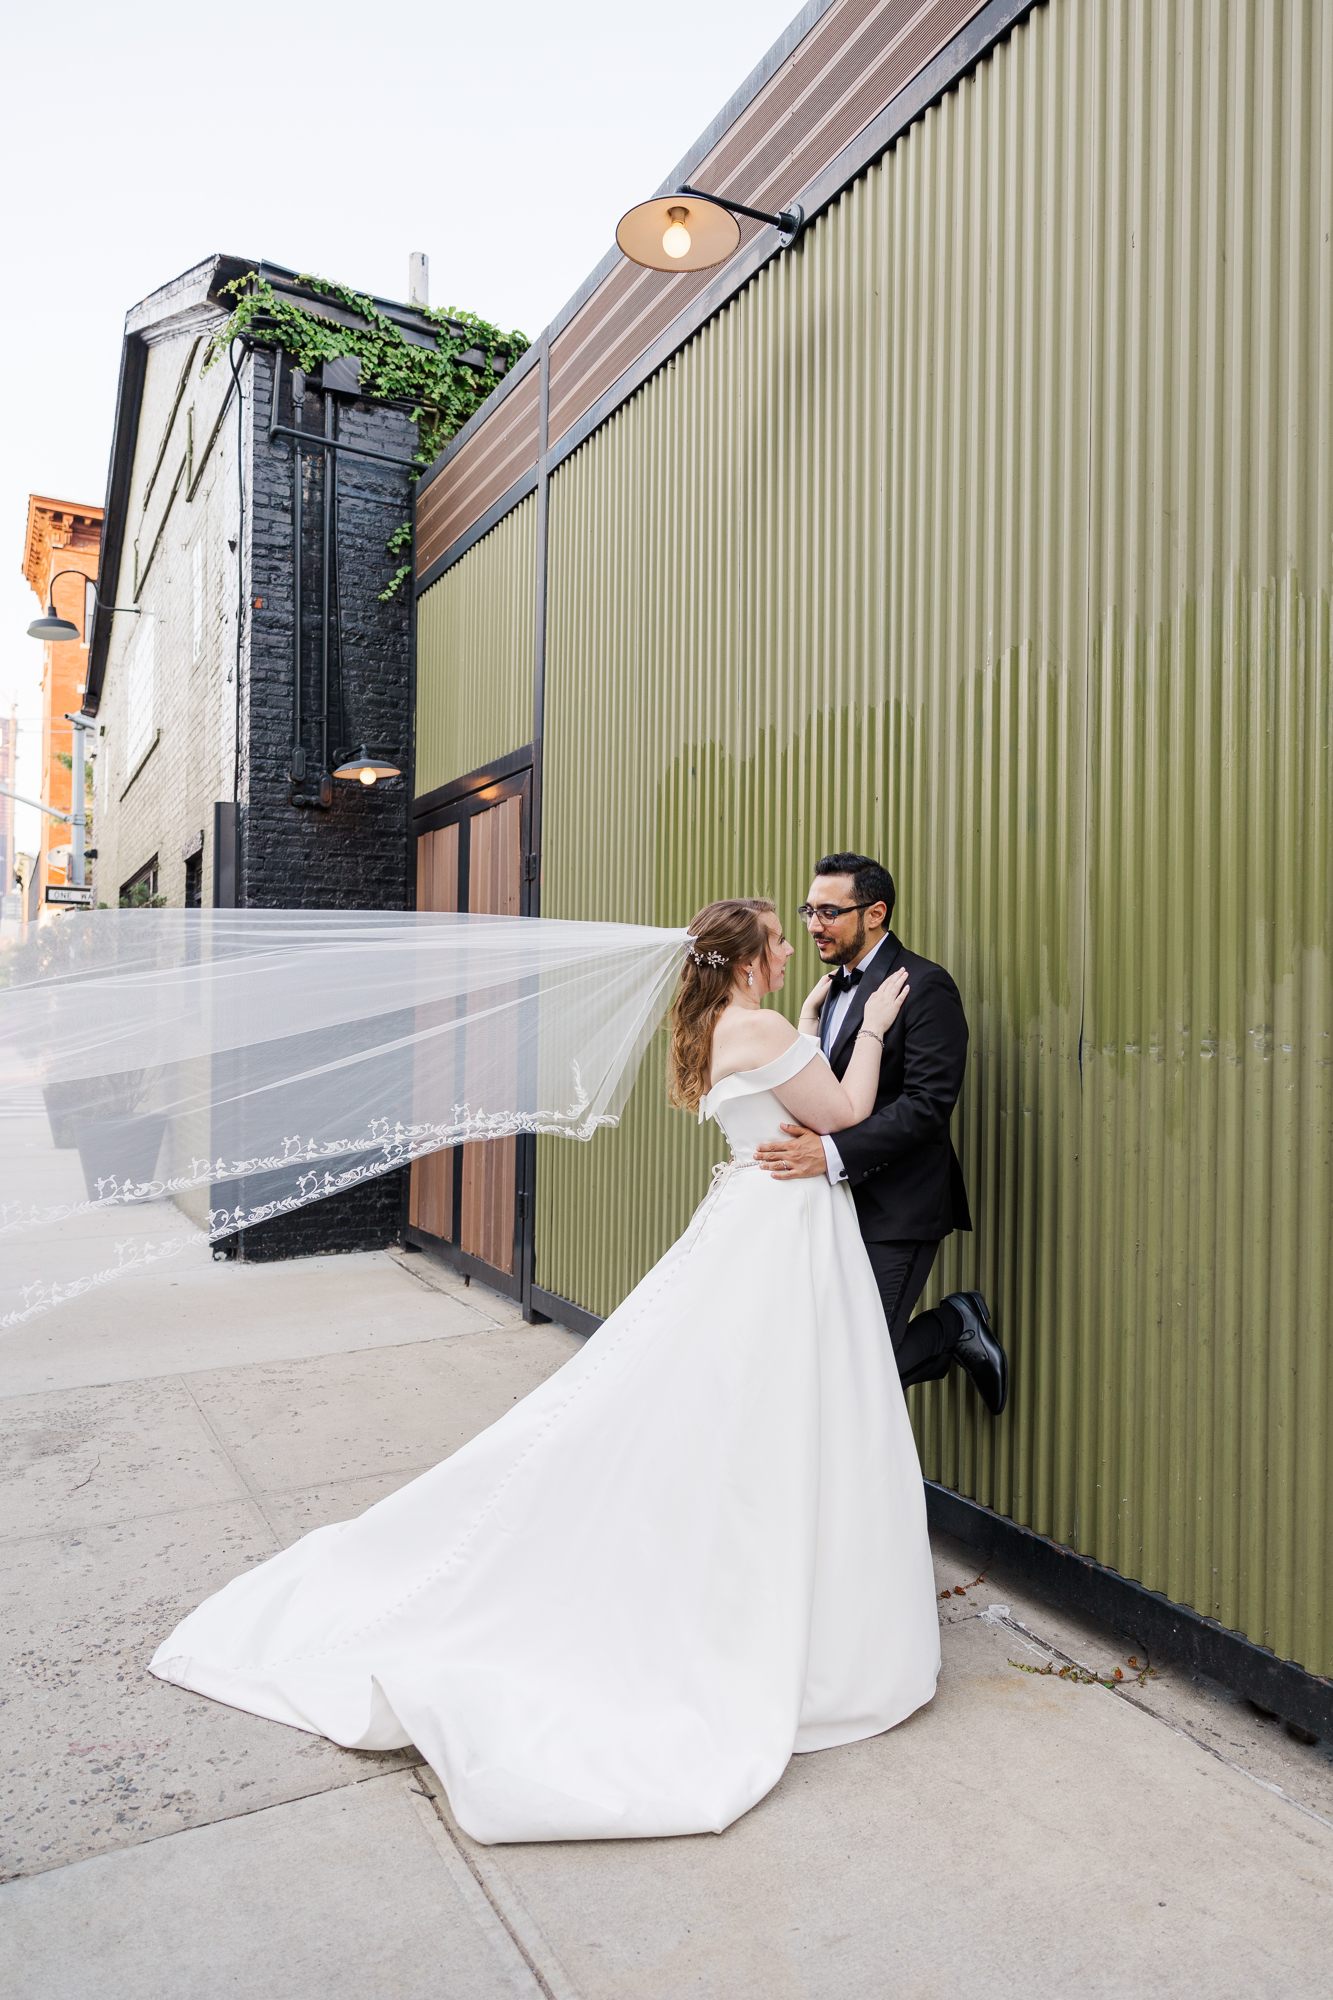 Charming Rustic Green Building Wedding Photos